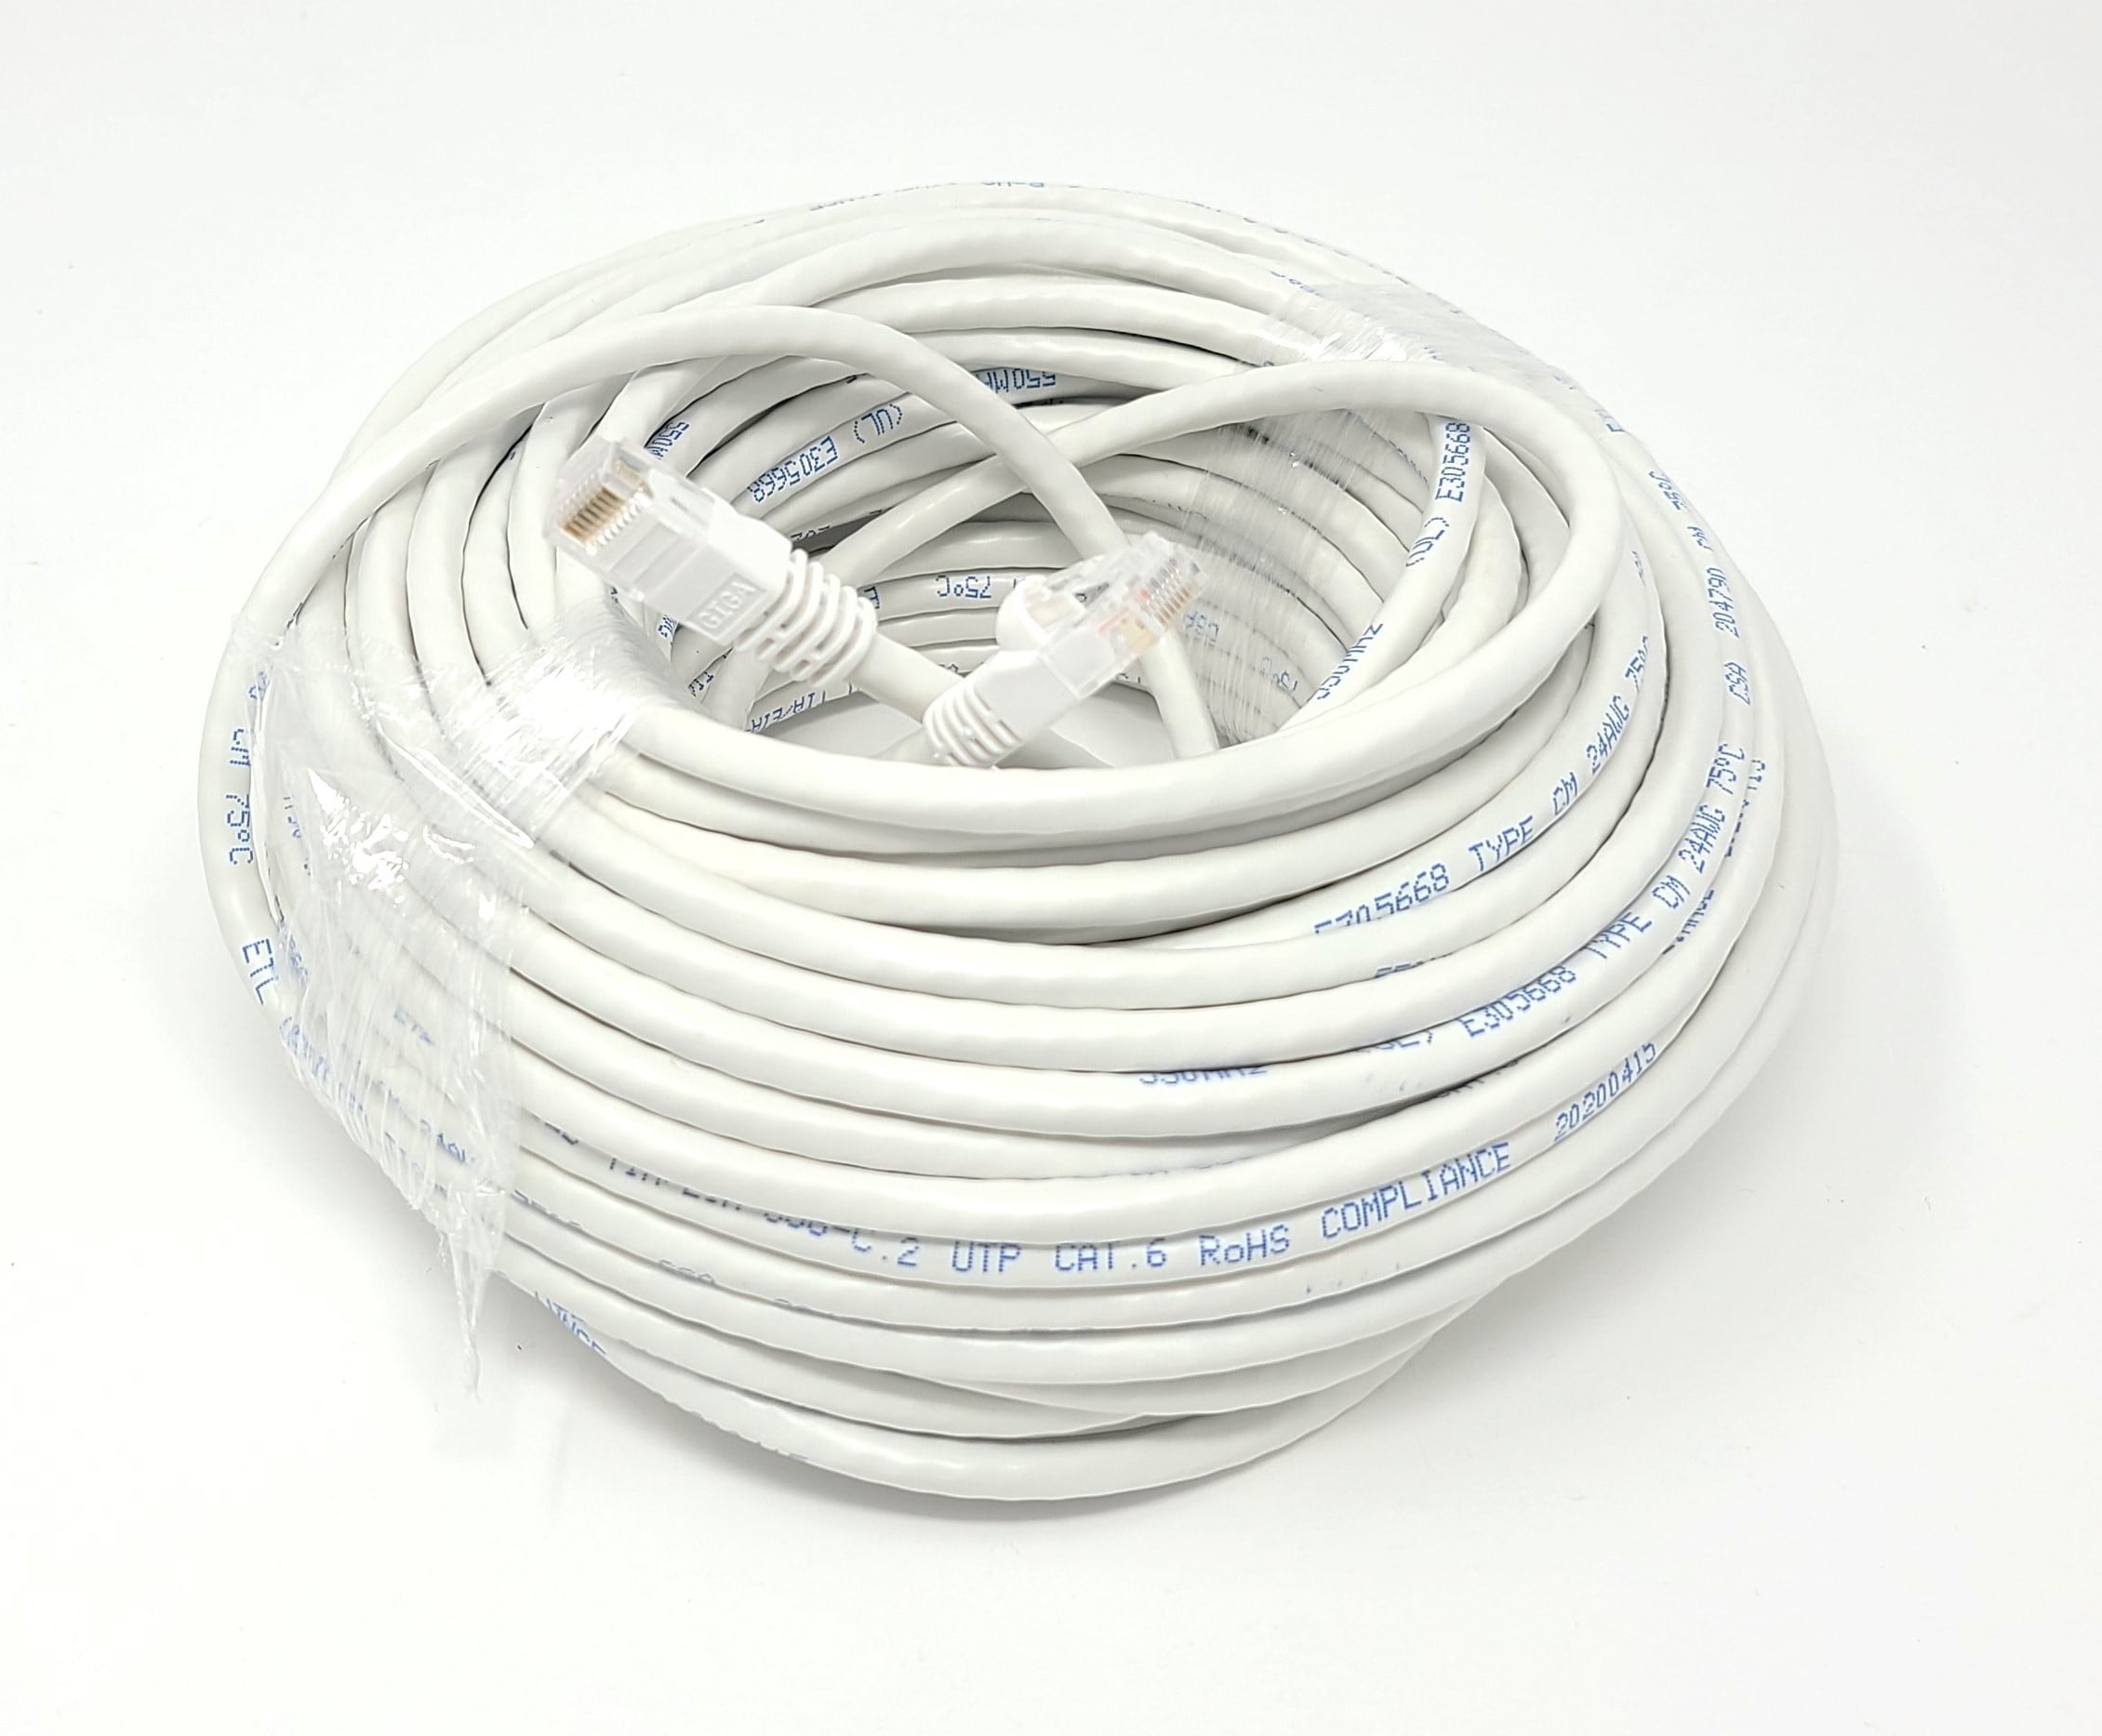 Legrand 100-ft Cat 6 Blue Ethernet Cable Coil